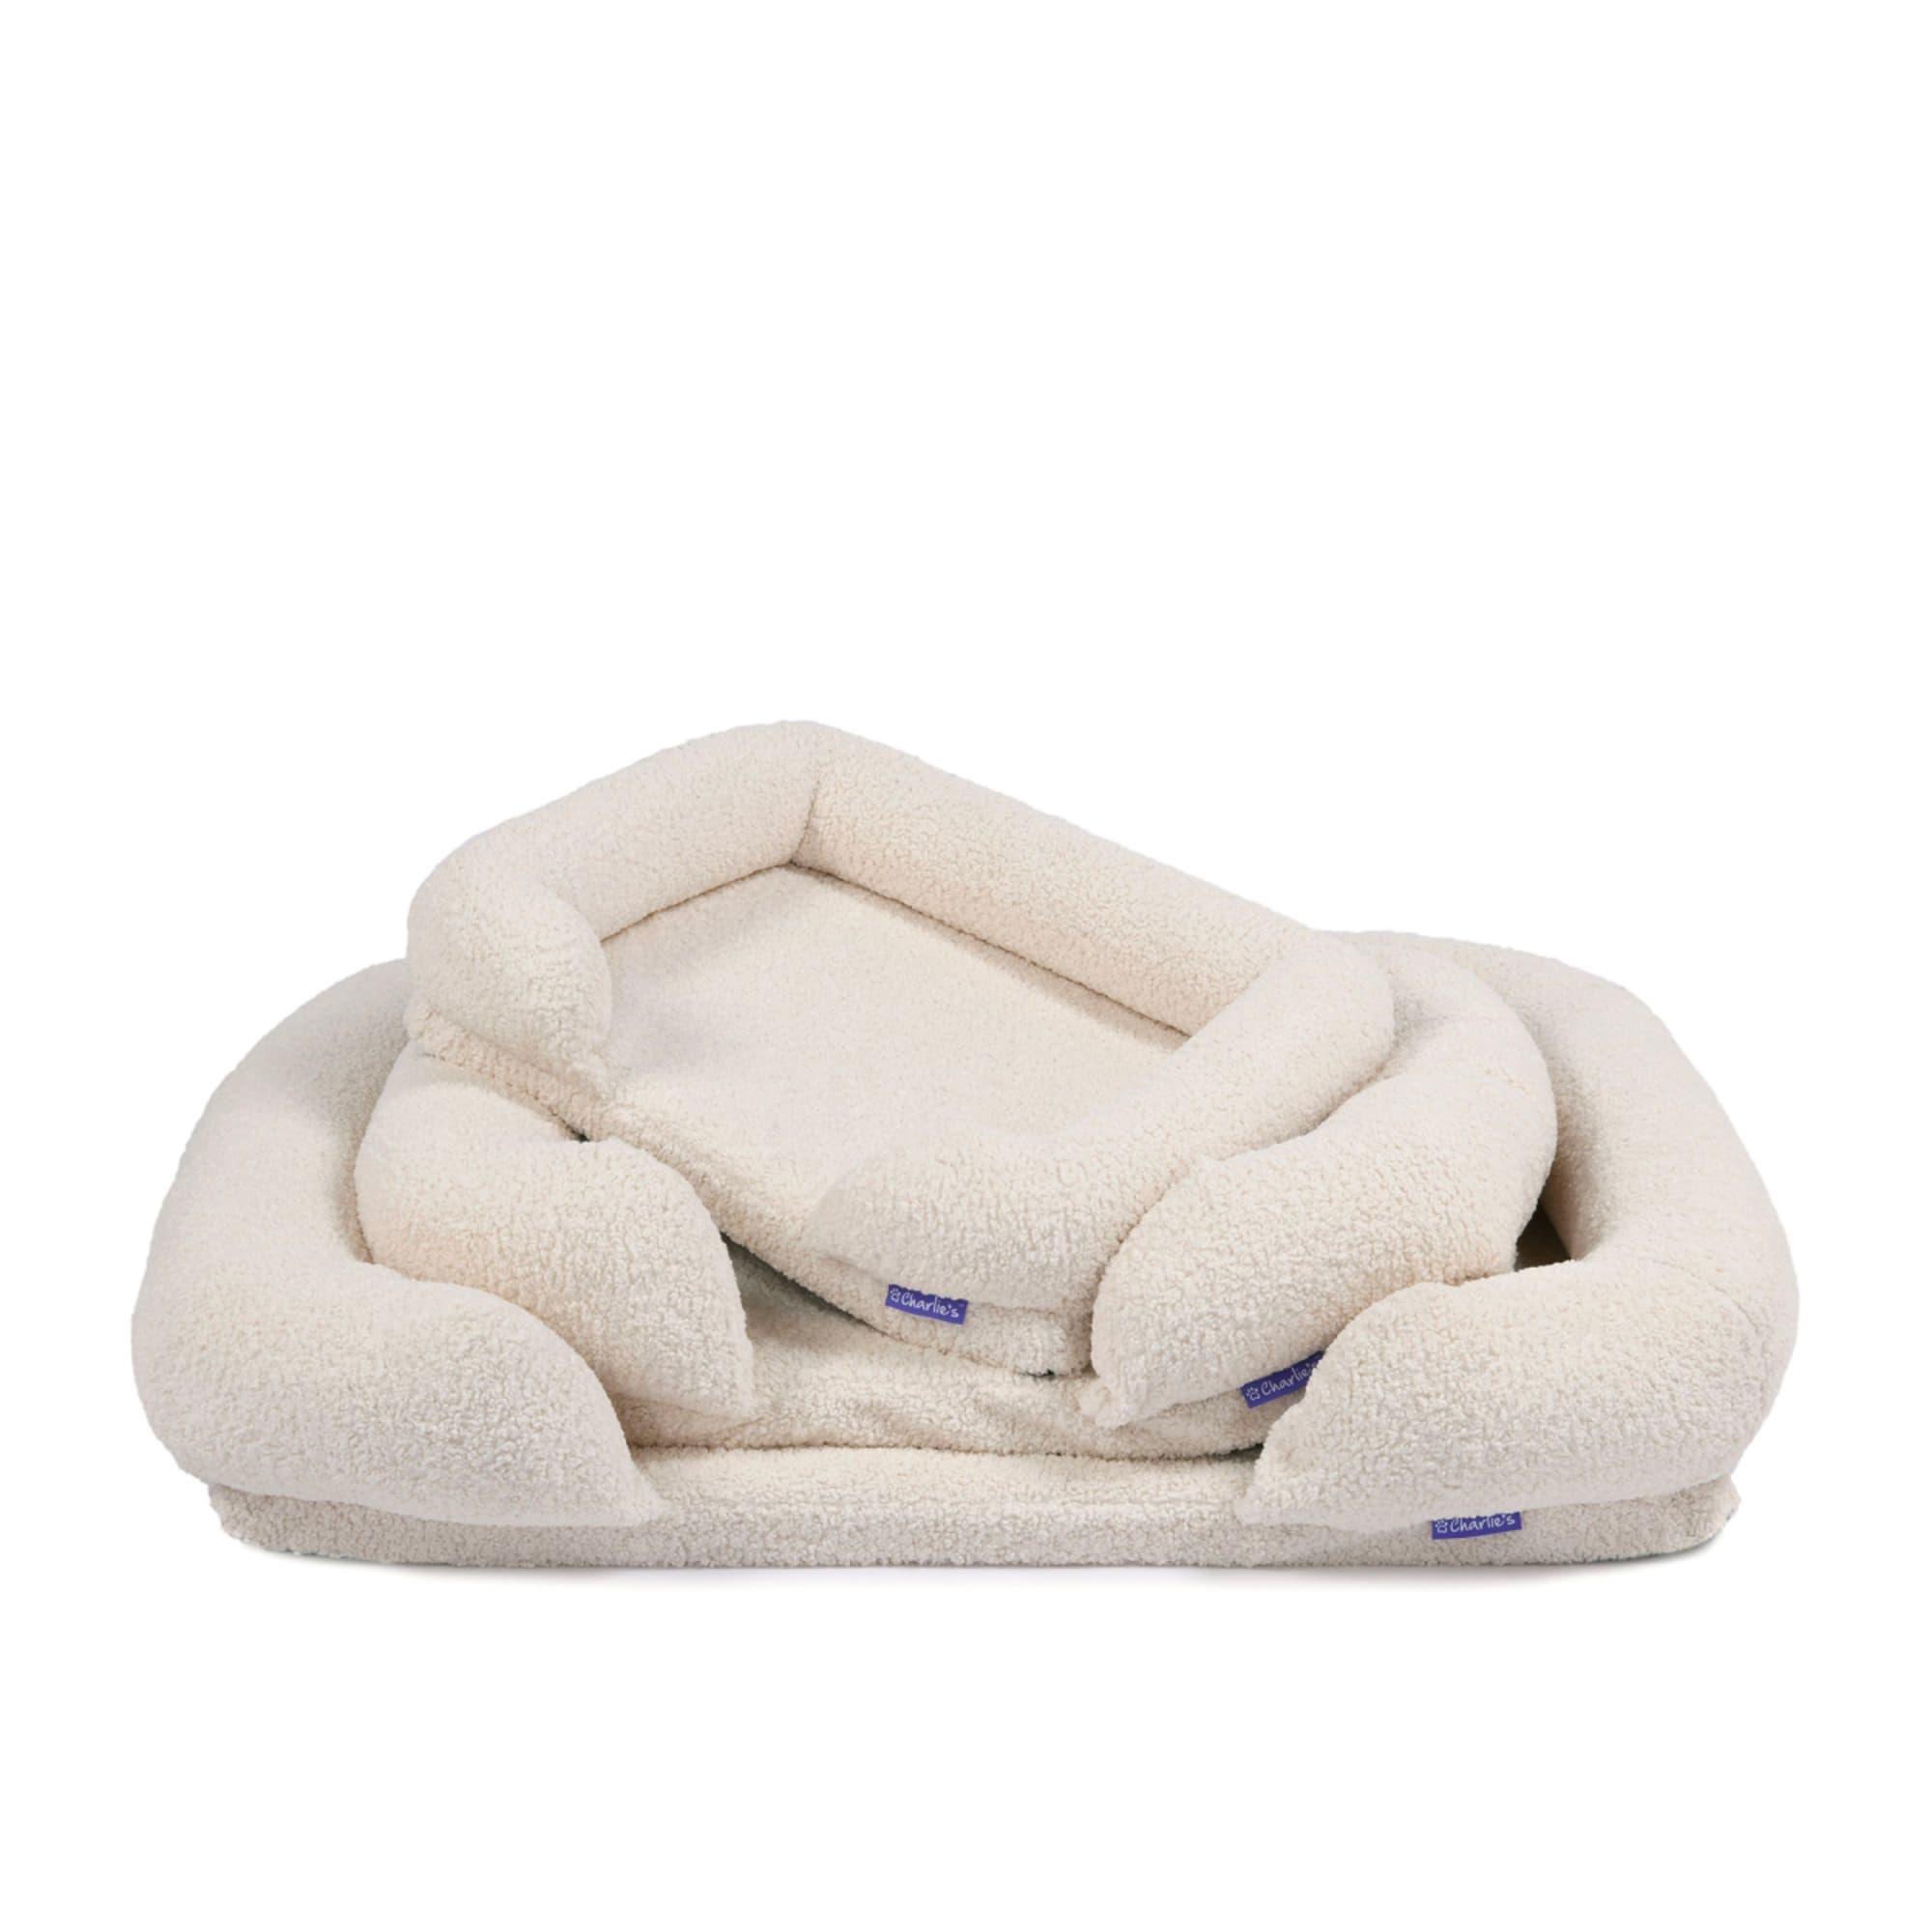 Charlie's Teddy Fleece Orthopedic Memory Foam Sofa Dog Bed Small Cream Image 6